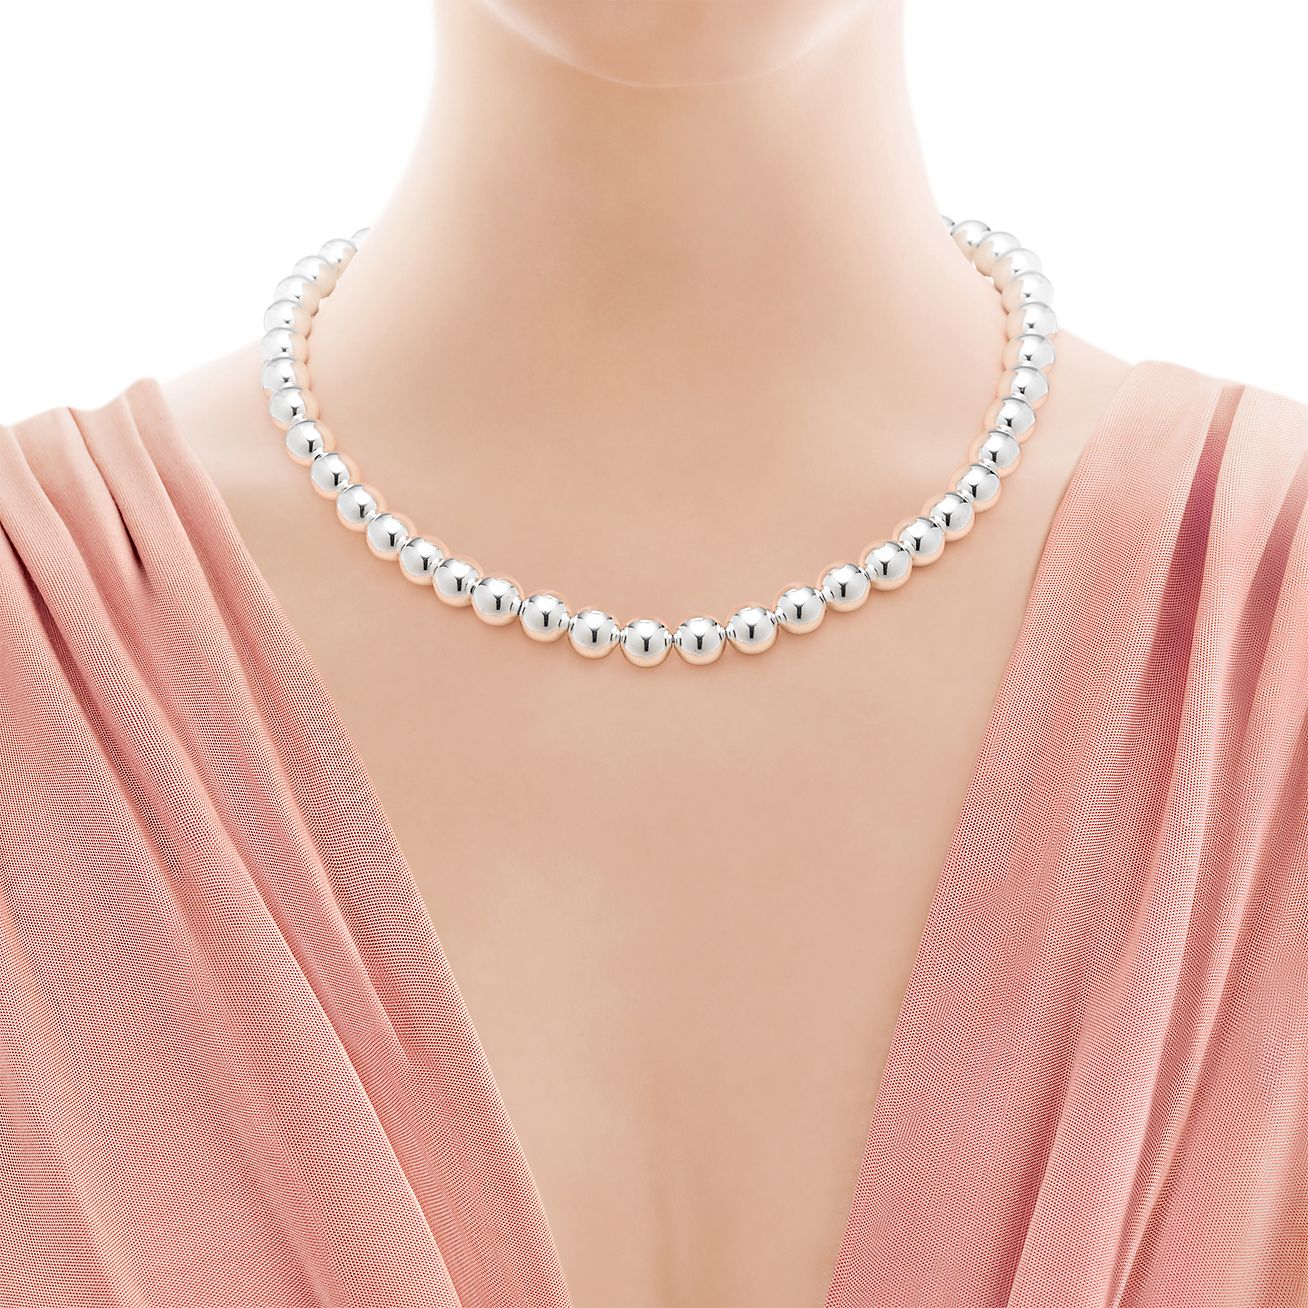 Tiffany HardWear ball necklace in 